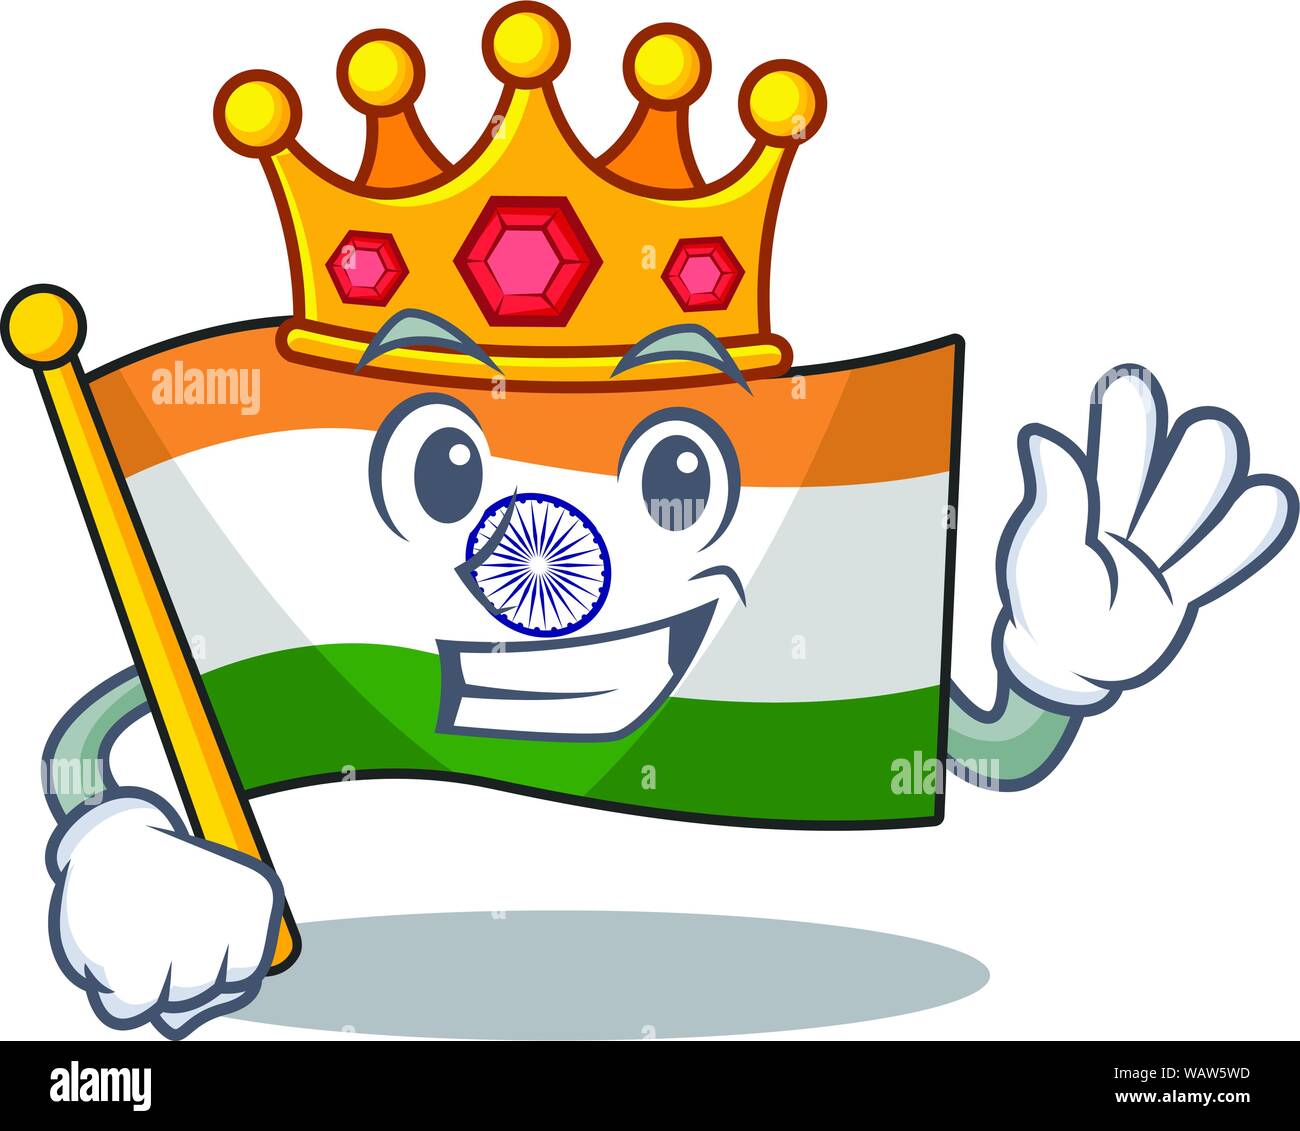 King indian flag kept in cartoon cupboard Stock Vector Image & Art - Alamy